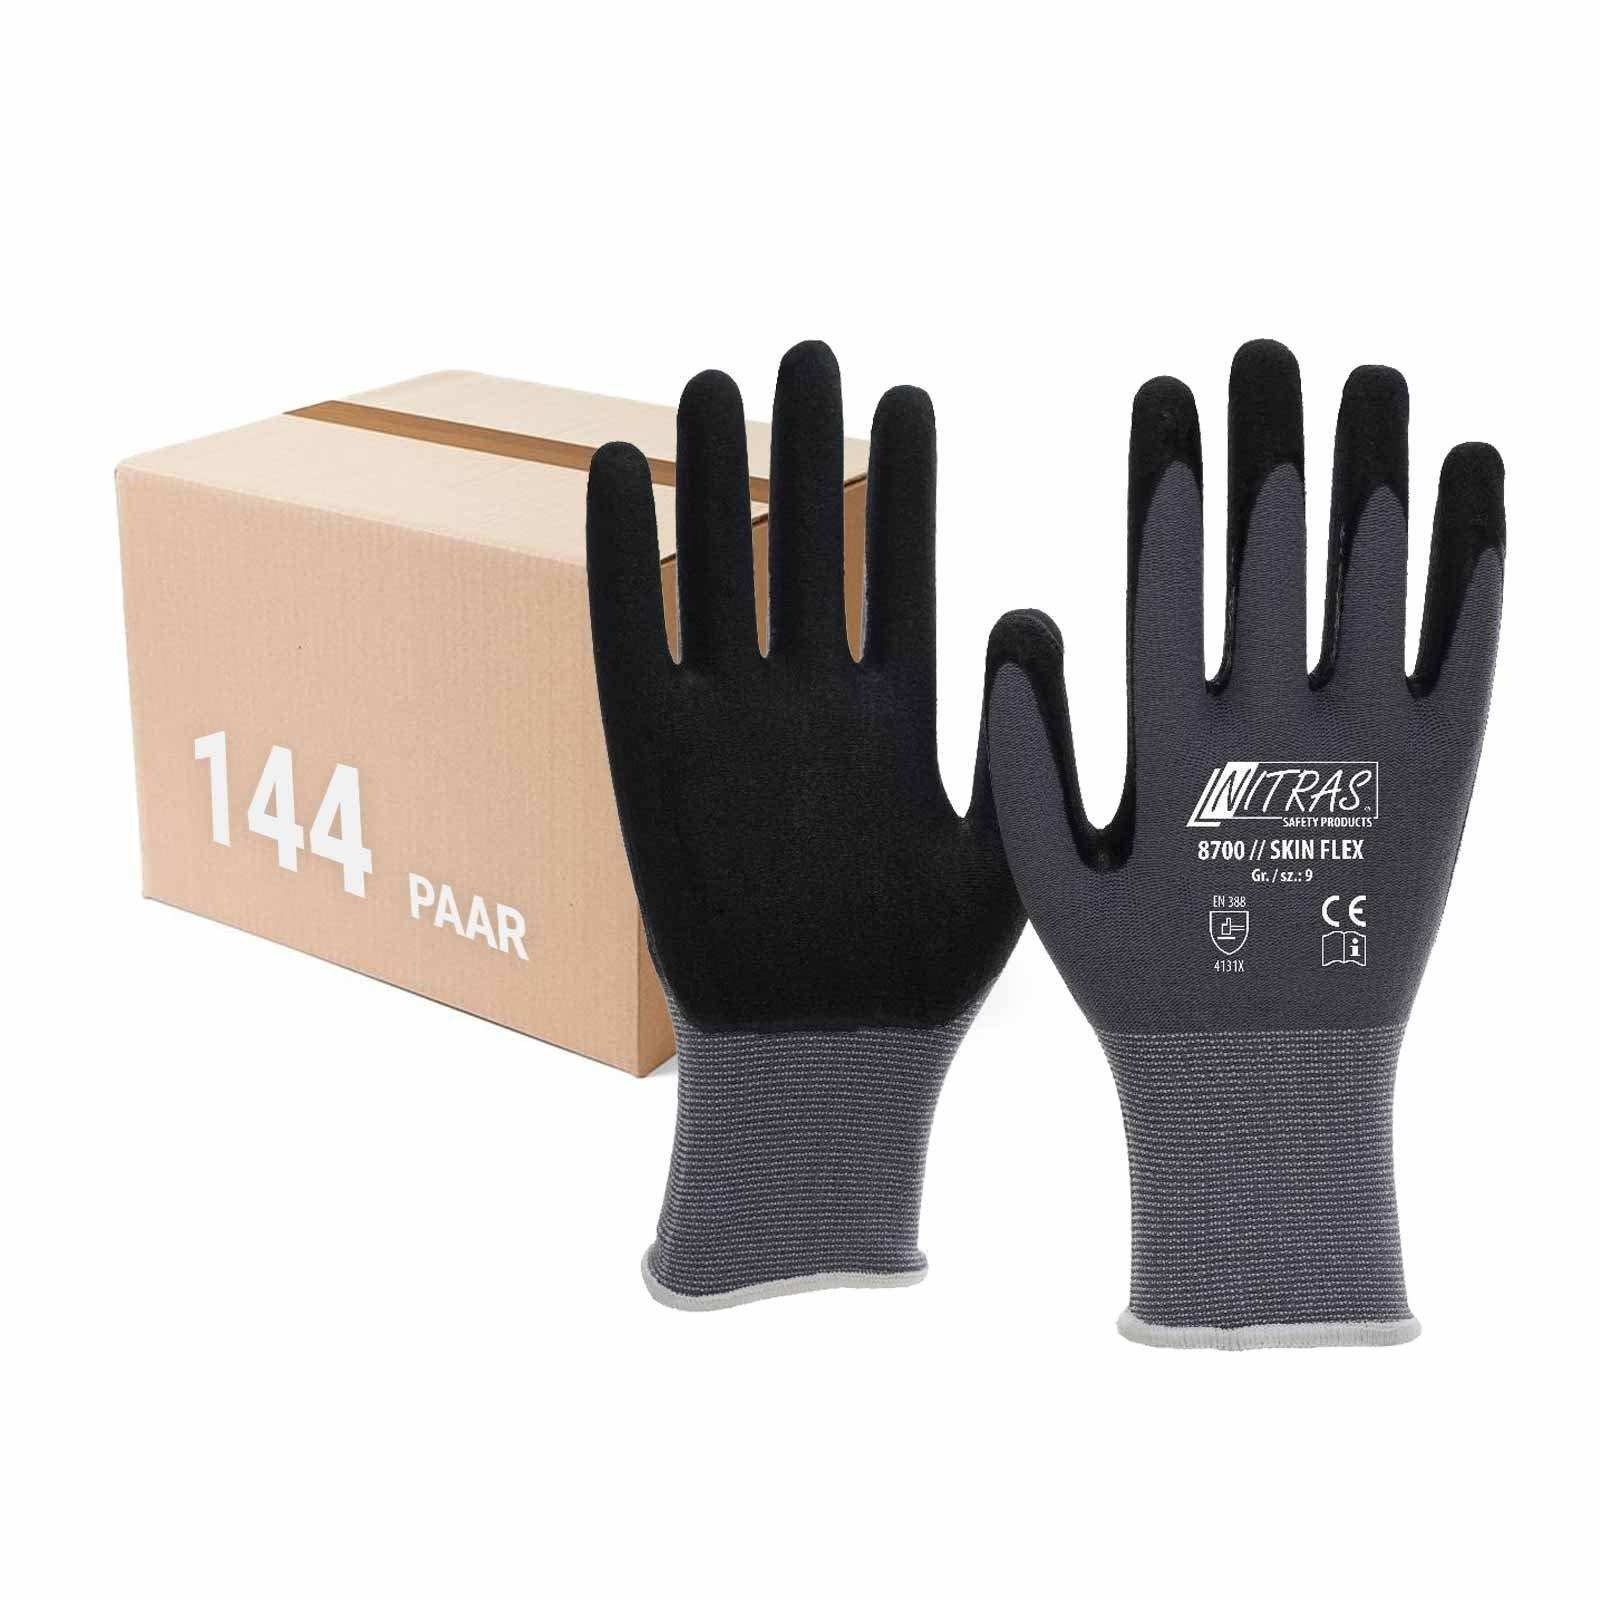 Strickhandschuhe (Spar-Set) gestrickte 8700 Handschuhe Nitras Skin-Flex Nitril-Handschuhe NITRAS Paar -144